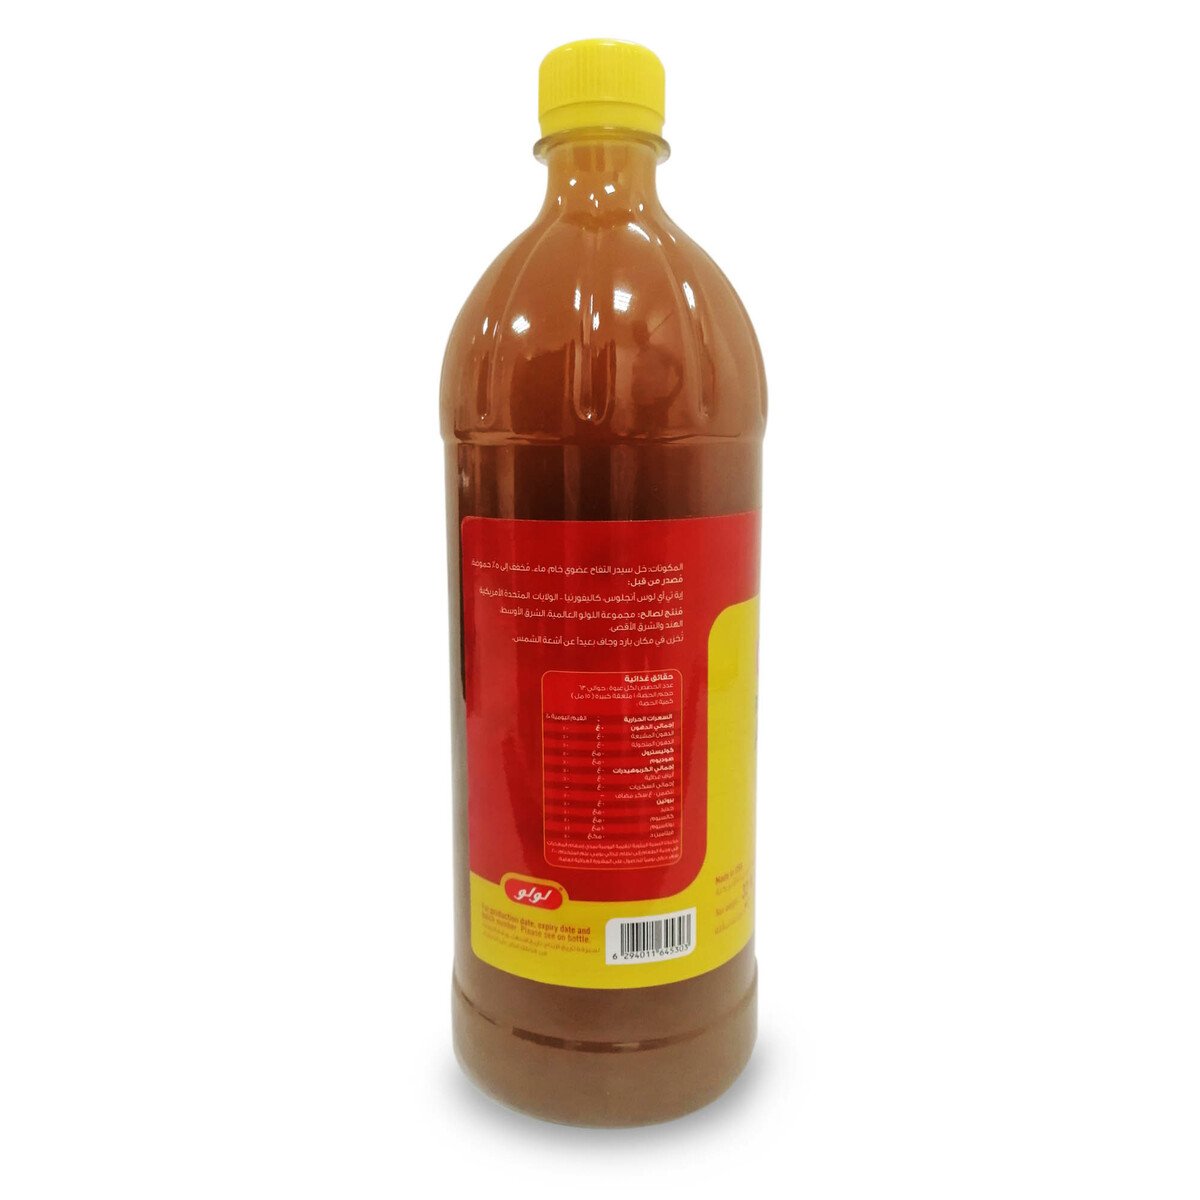 LuLu Organic Apple Cider Vinegar 32oz